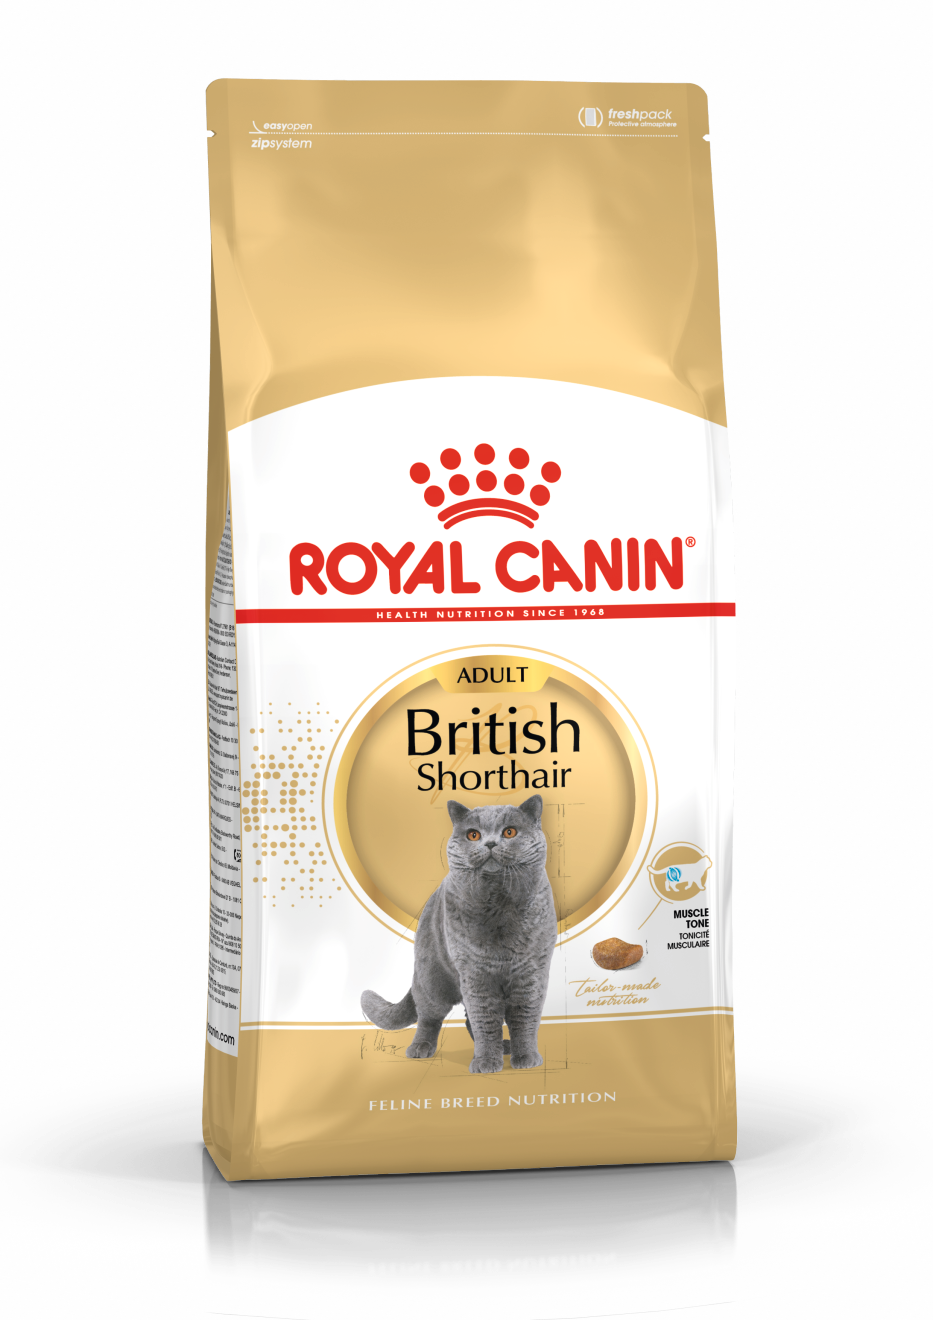 ROYAL CANIN British Shorthair Adult Cat Food